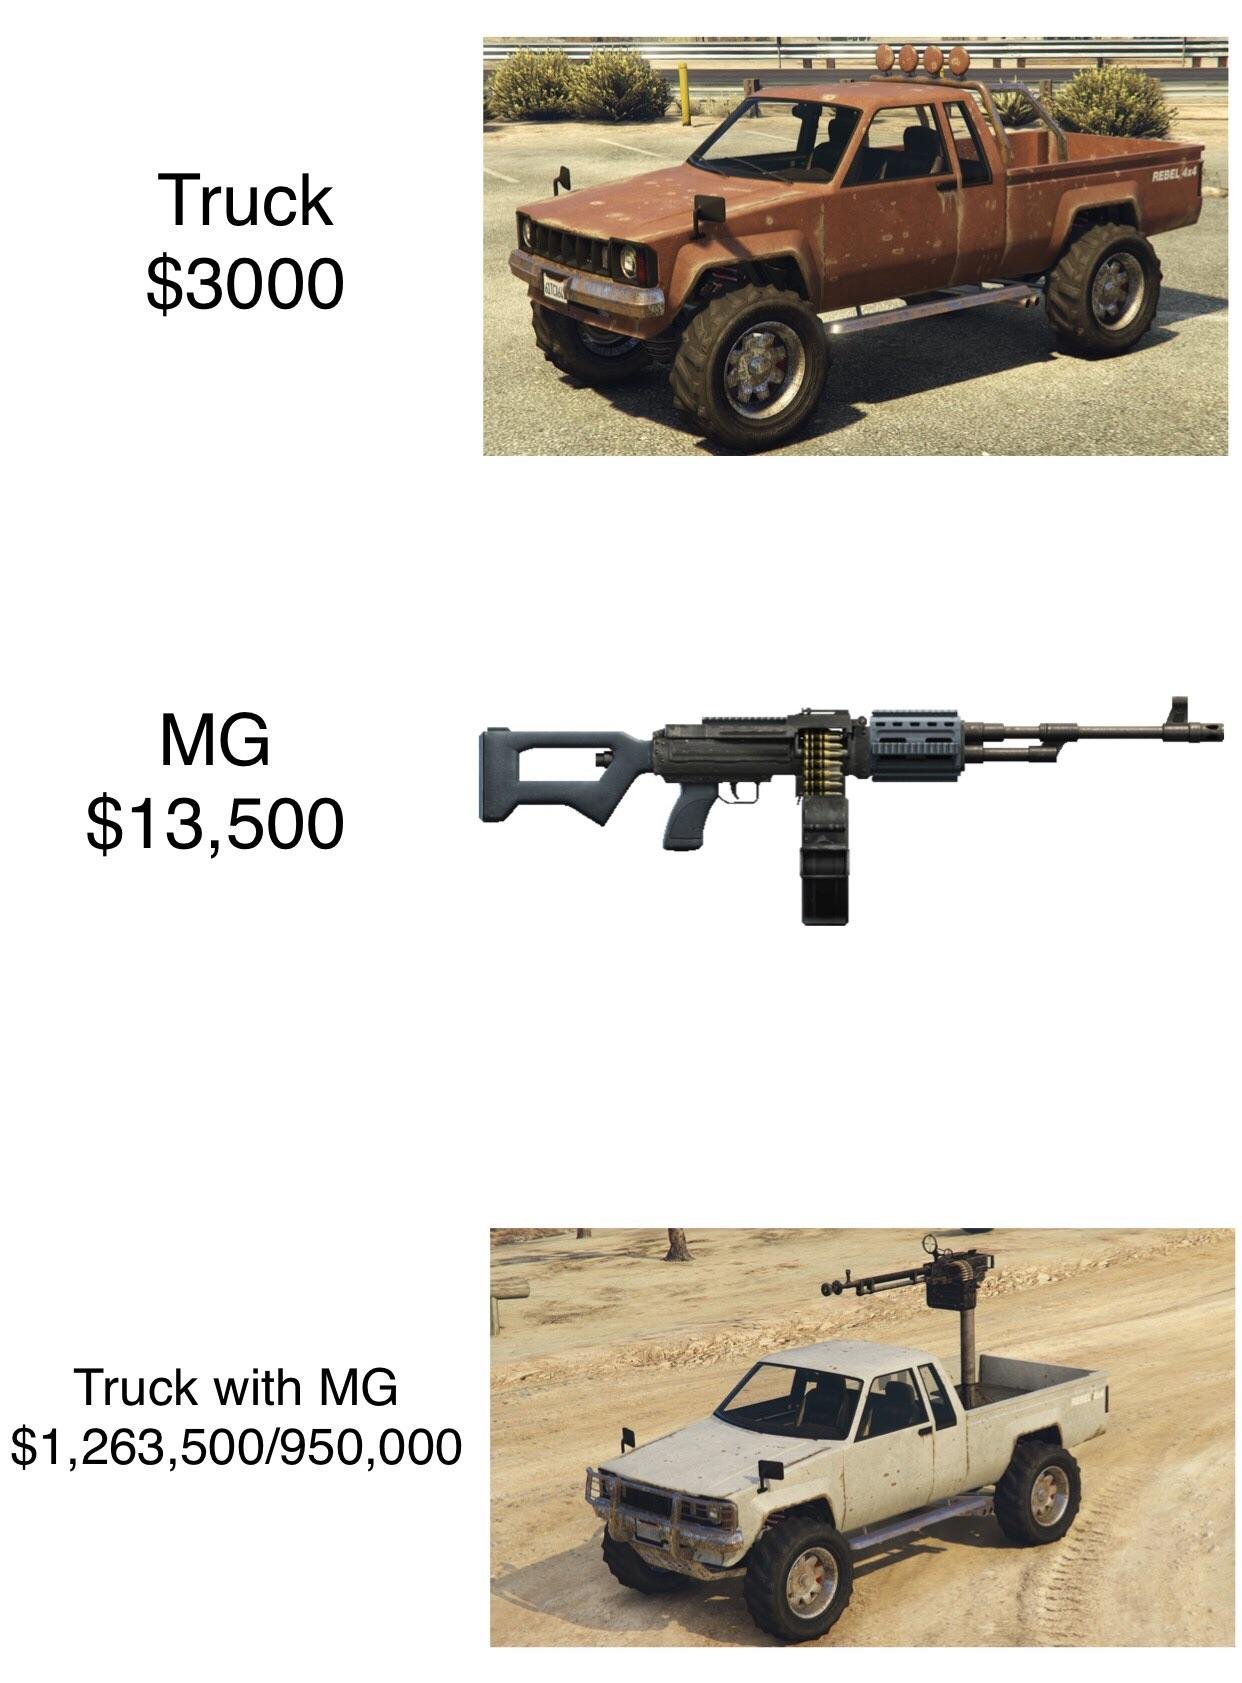 gta v logic - Truck $3000 Mg $13,500 Truck with Mg $1,263,500950,000